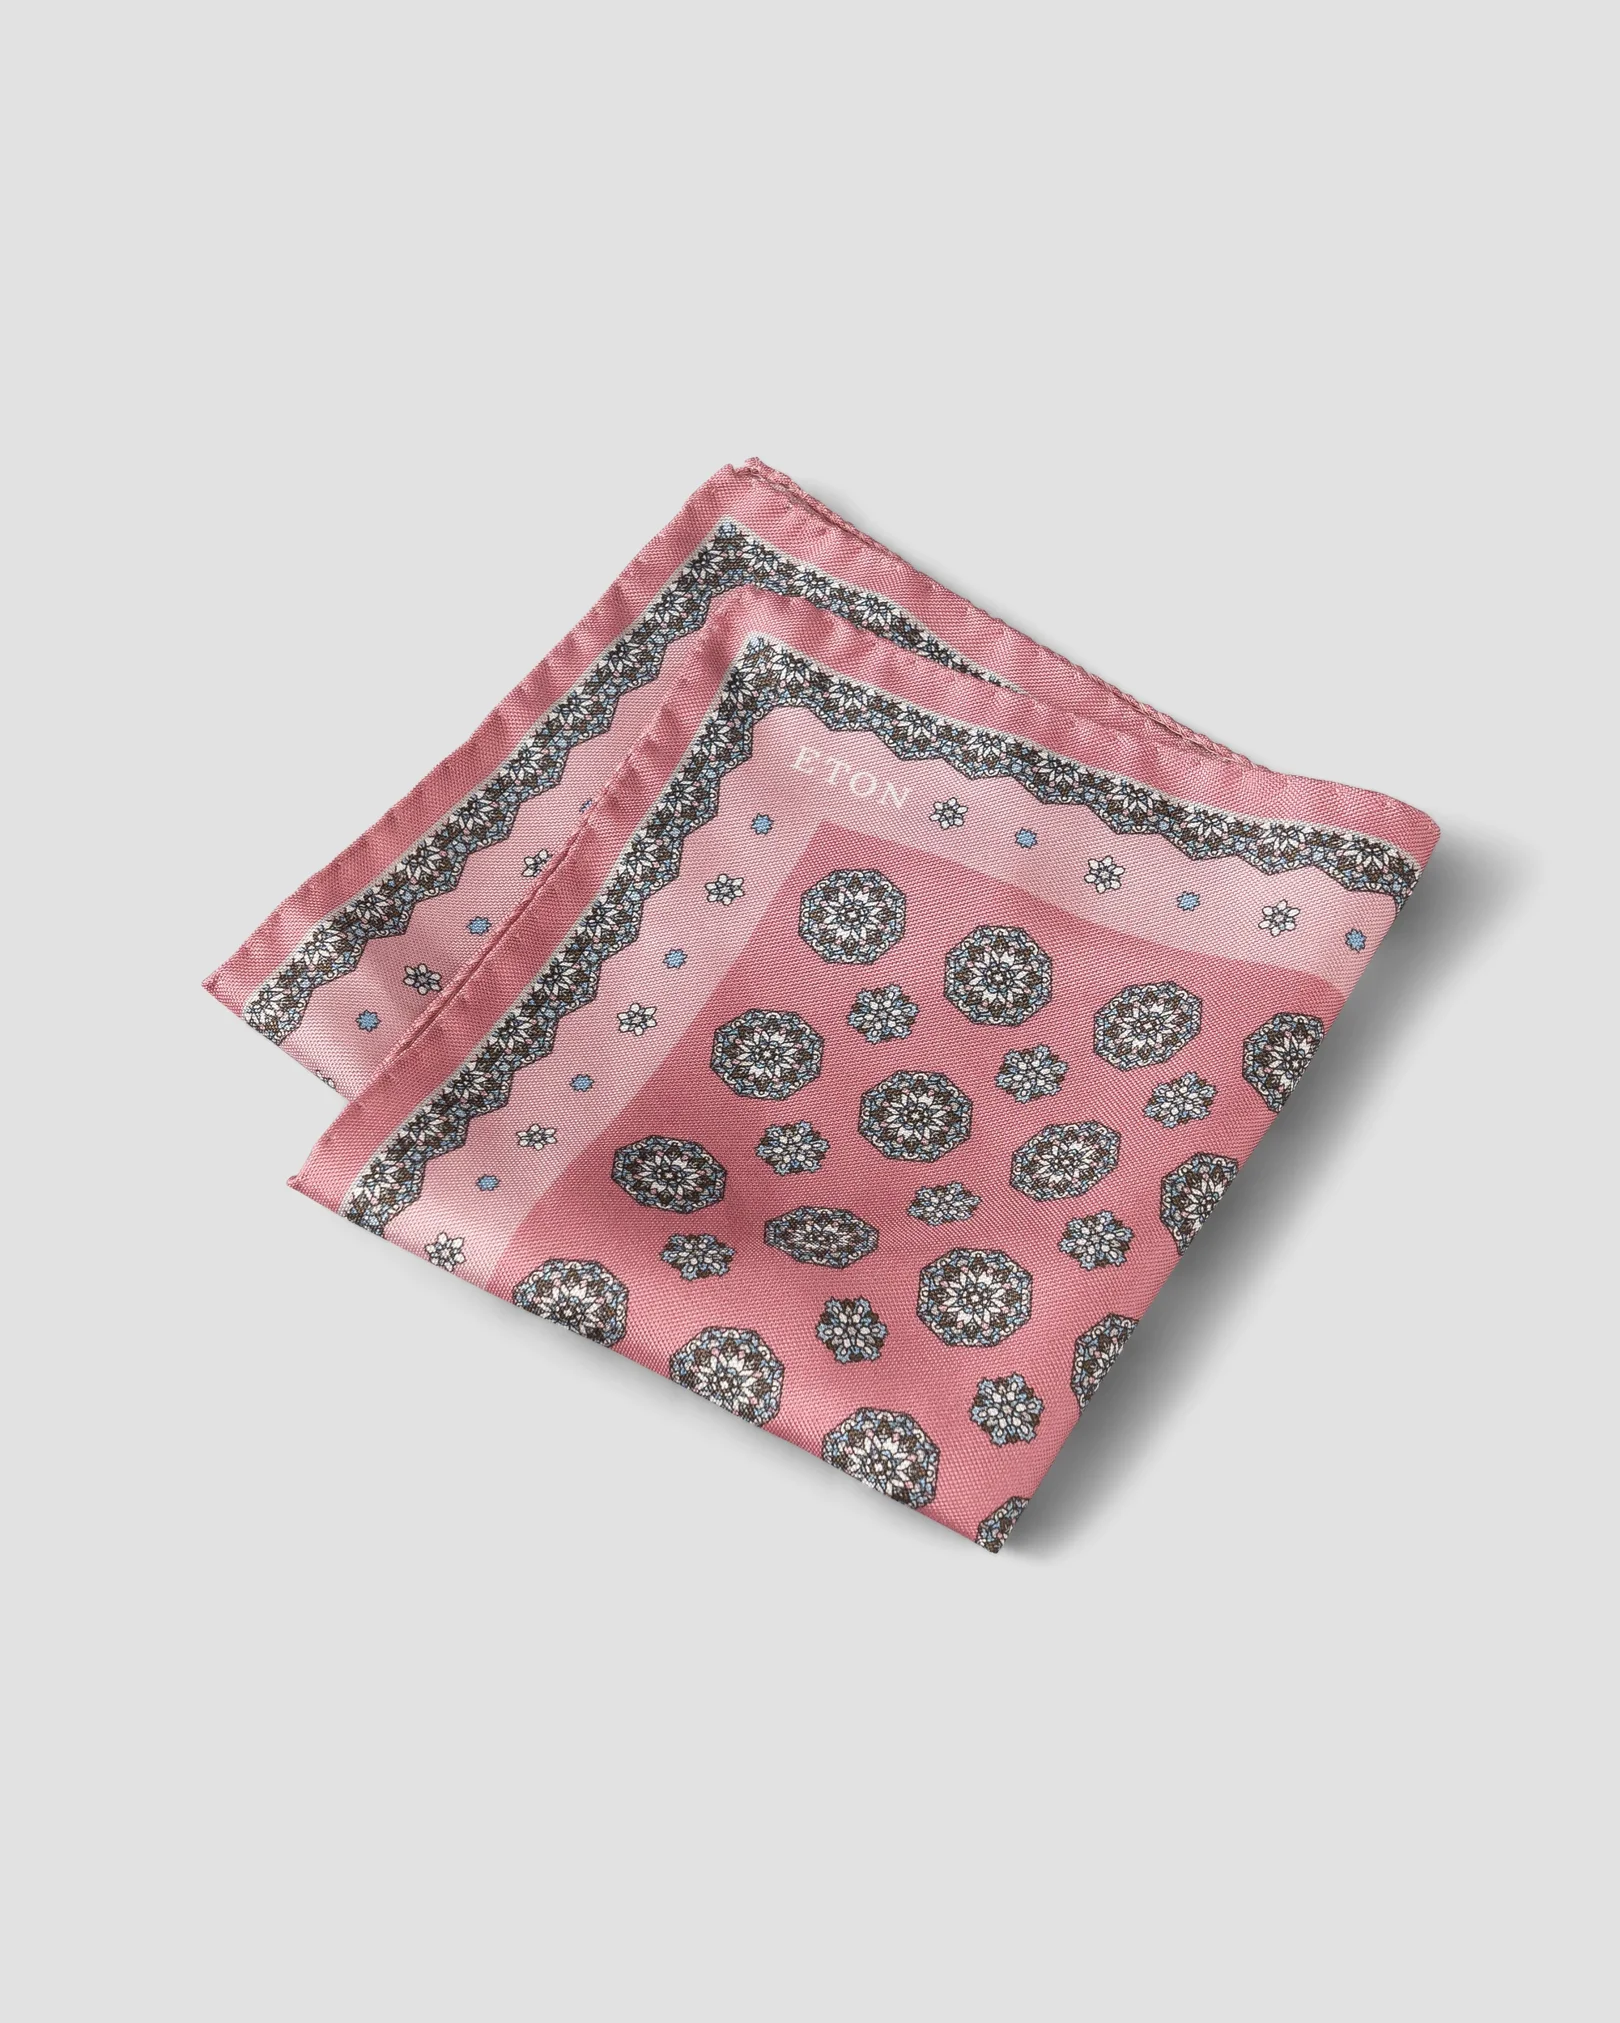 Eton - pink accessories pocket squares